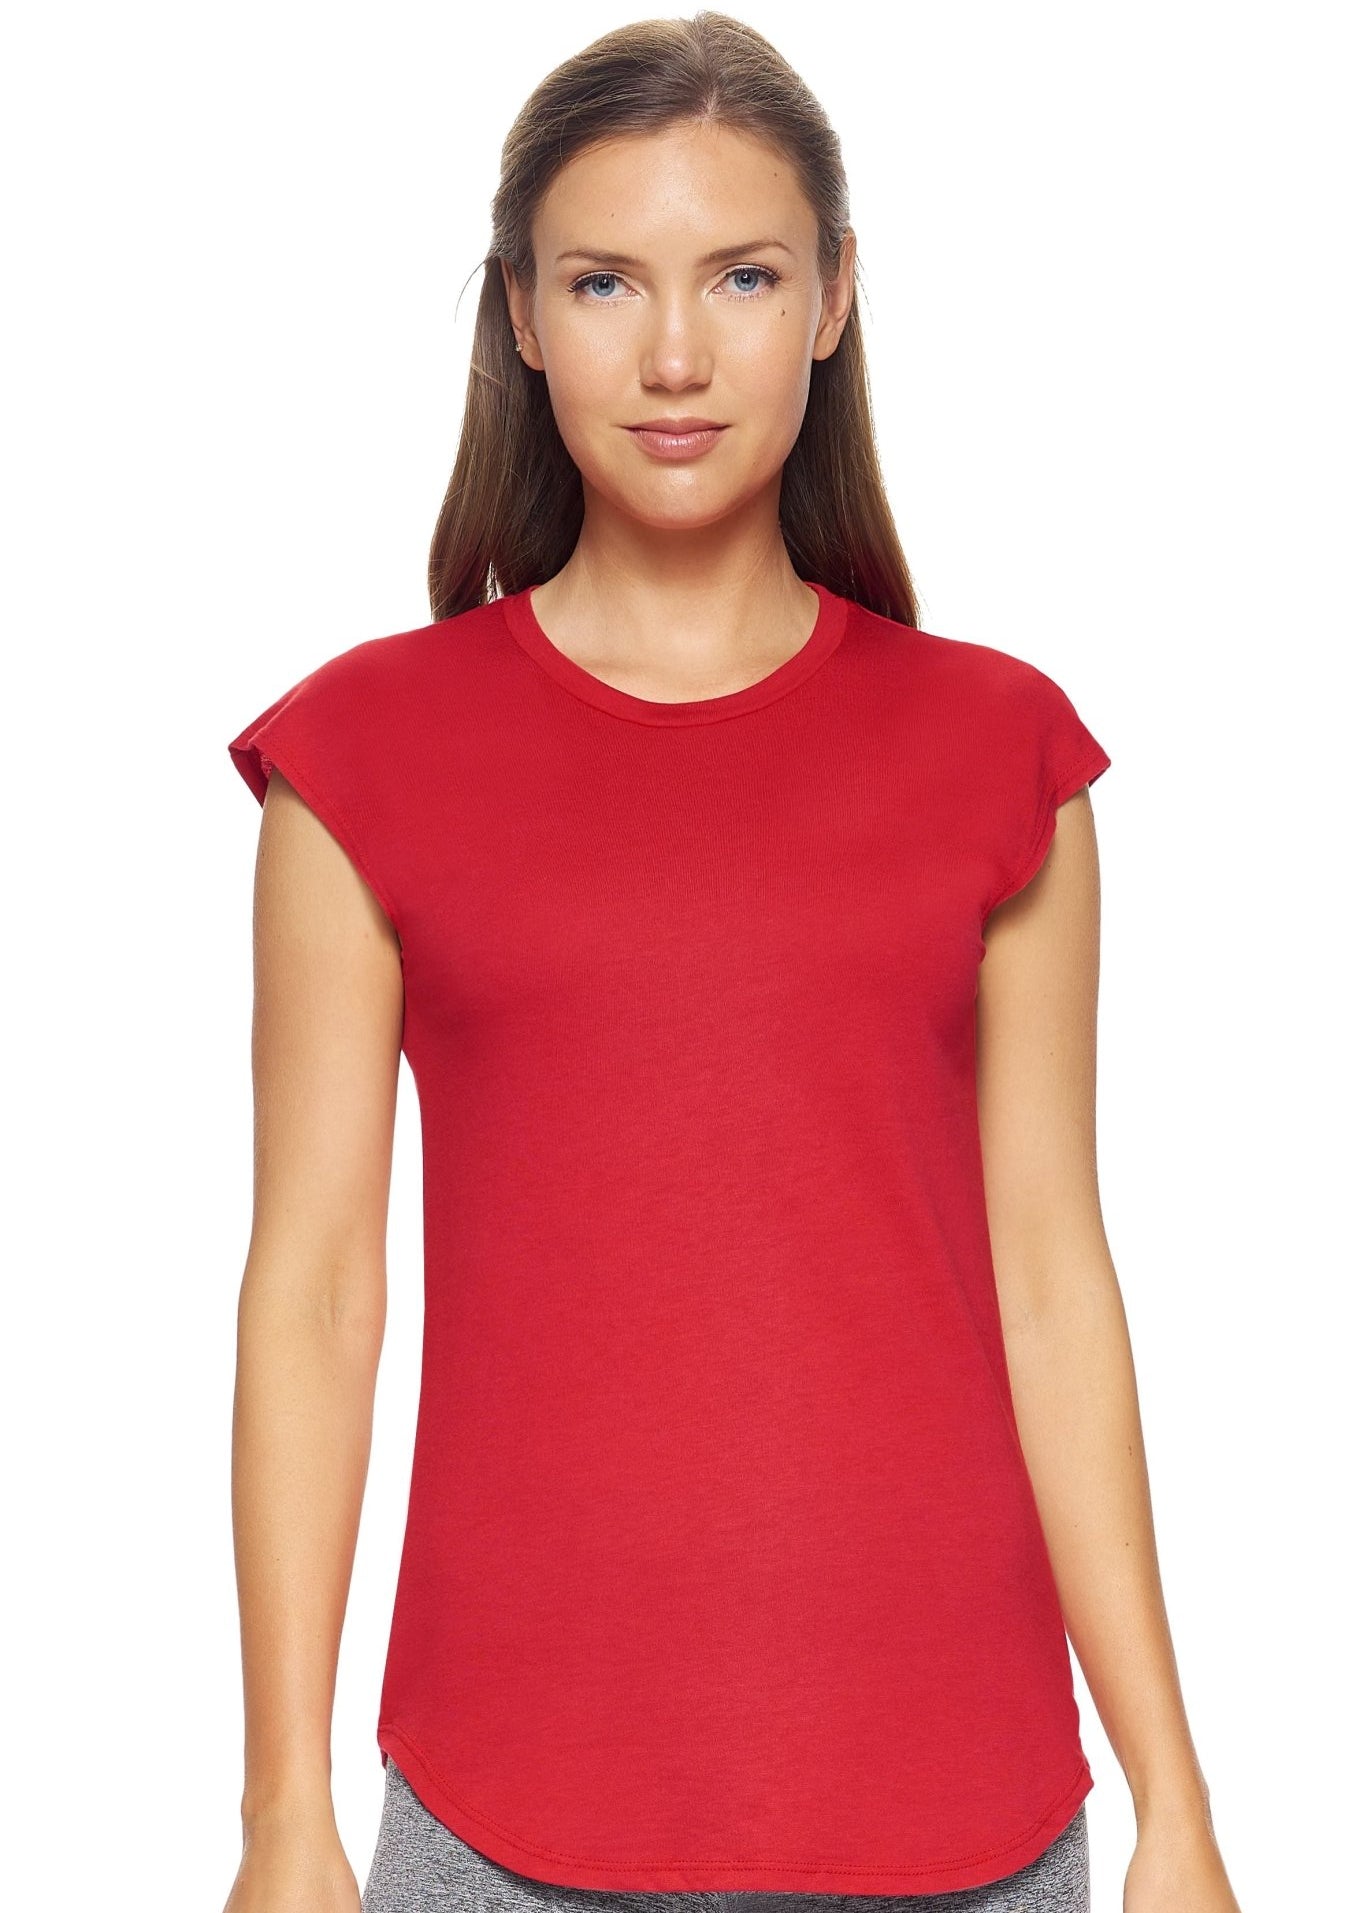 Expert Brand MoCA Plant Based Cap Sleeve T-Shirt - DressbarnActivewear